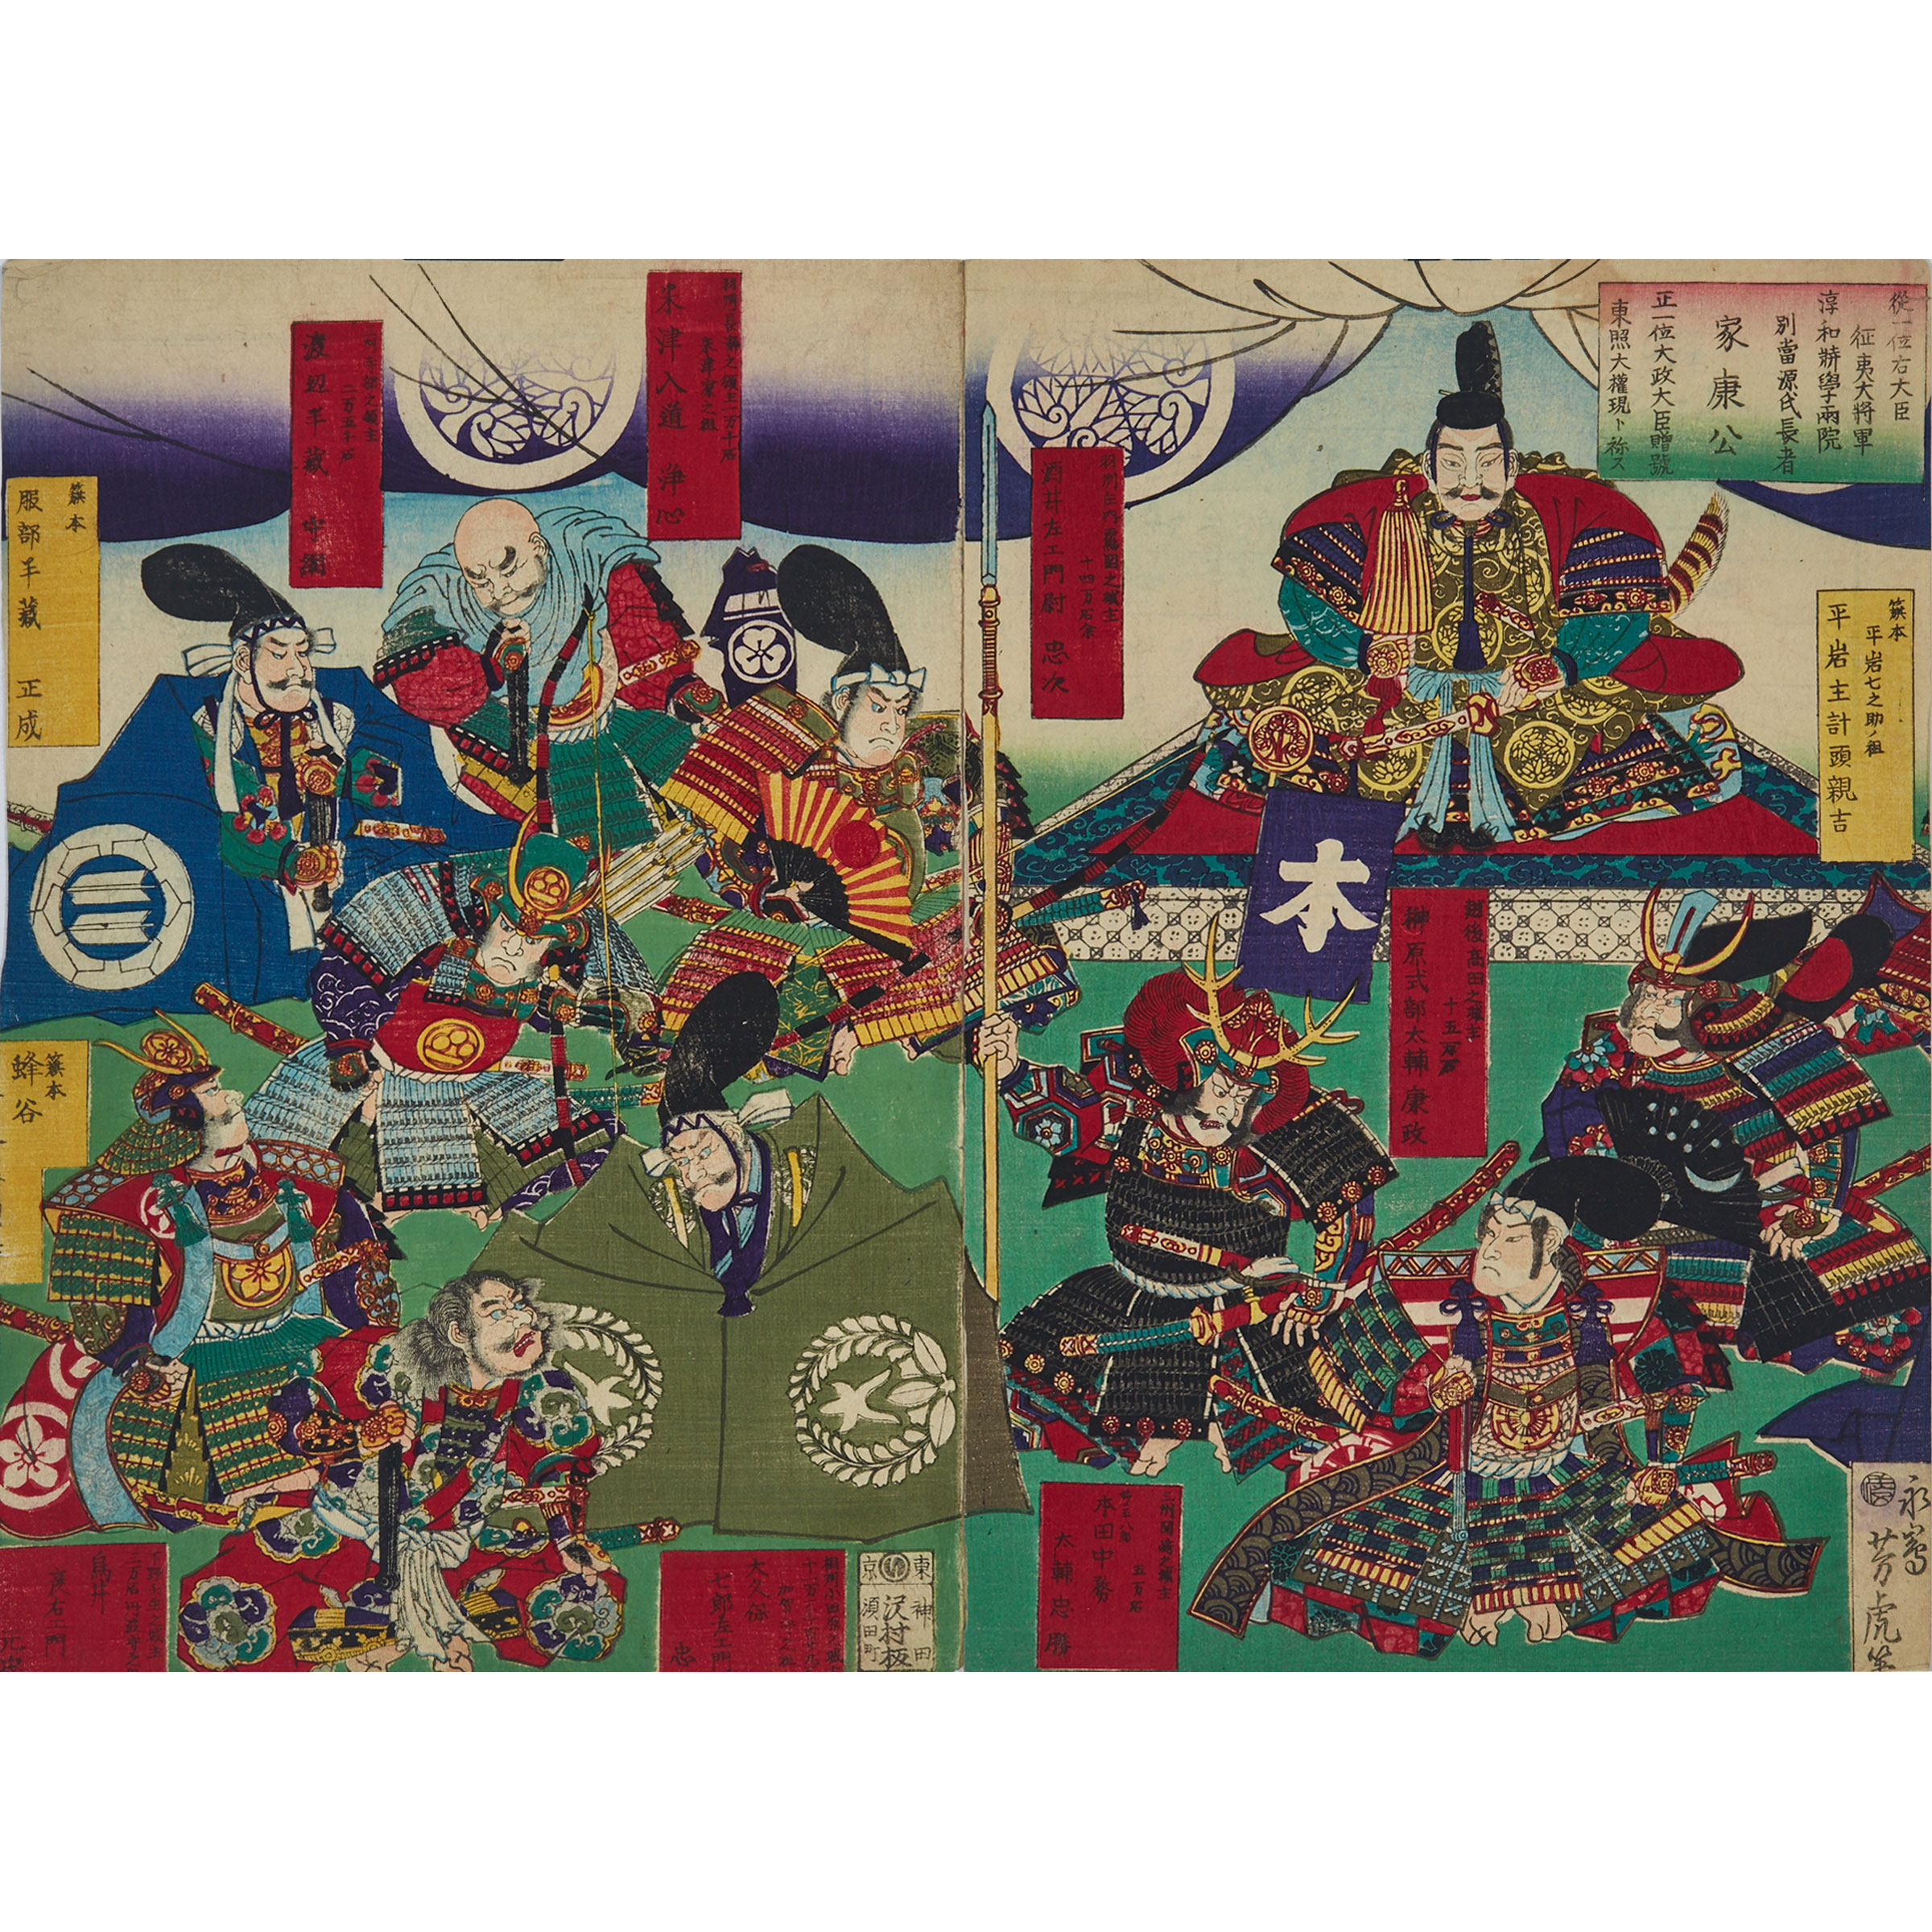 Utagawa Yoshitora (active 1850-1880), A Group of Eight Woodblock Prints, 19th Century